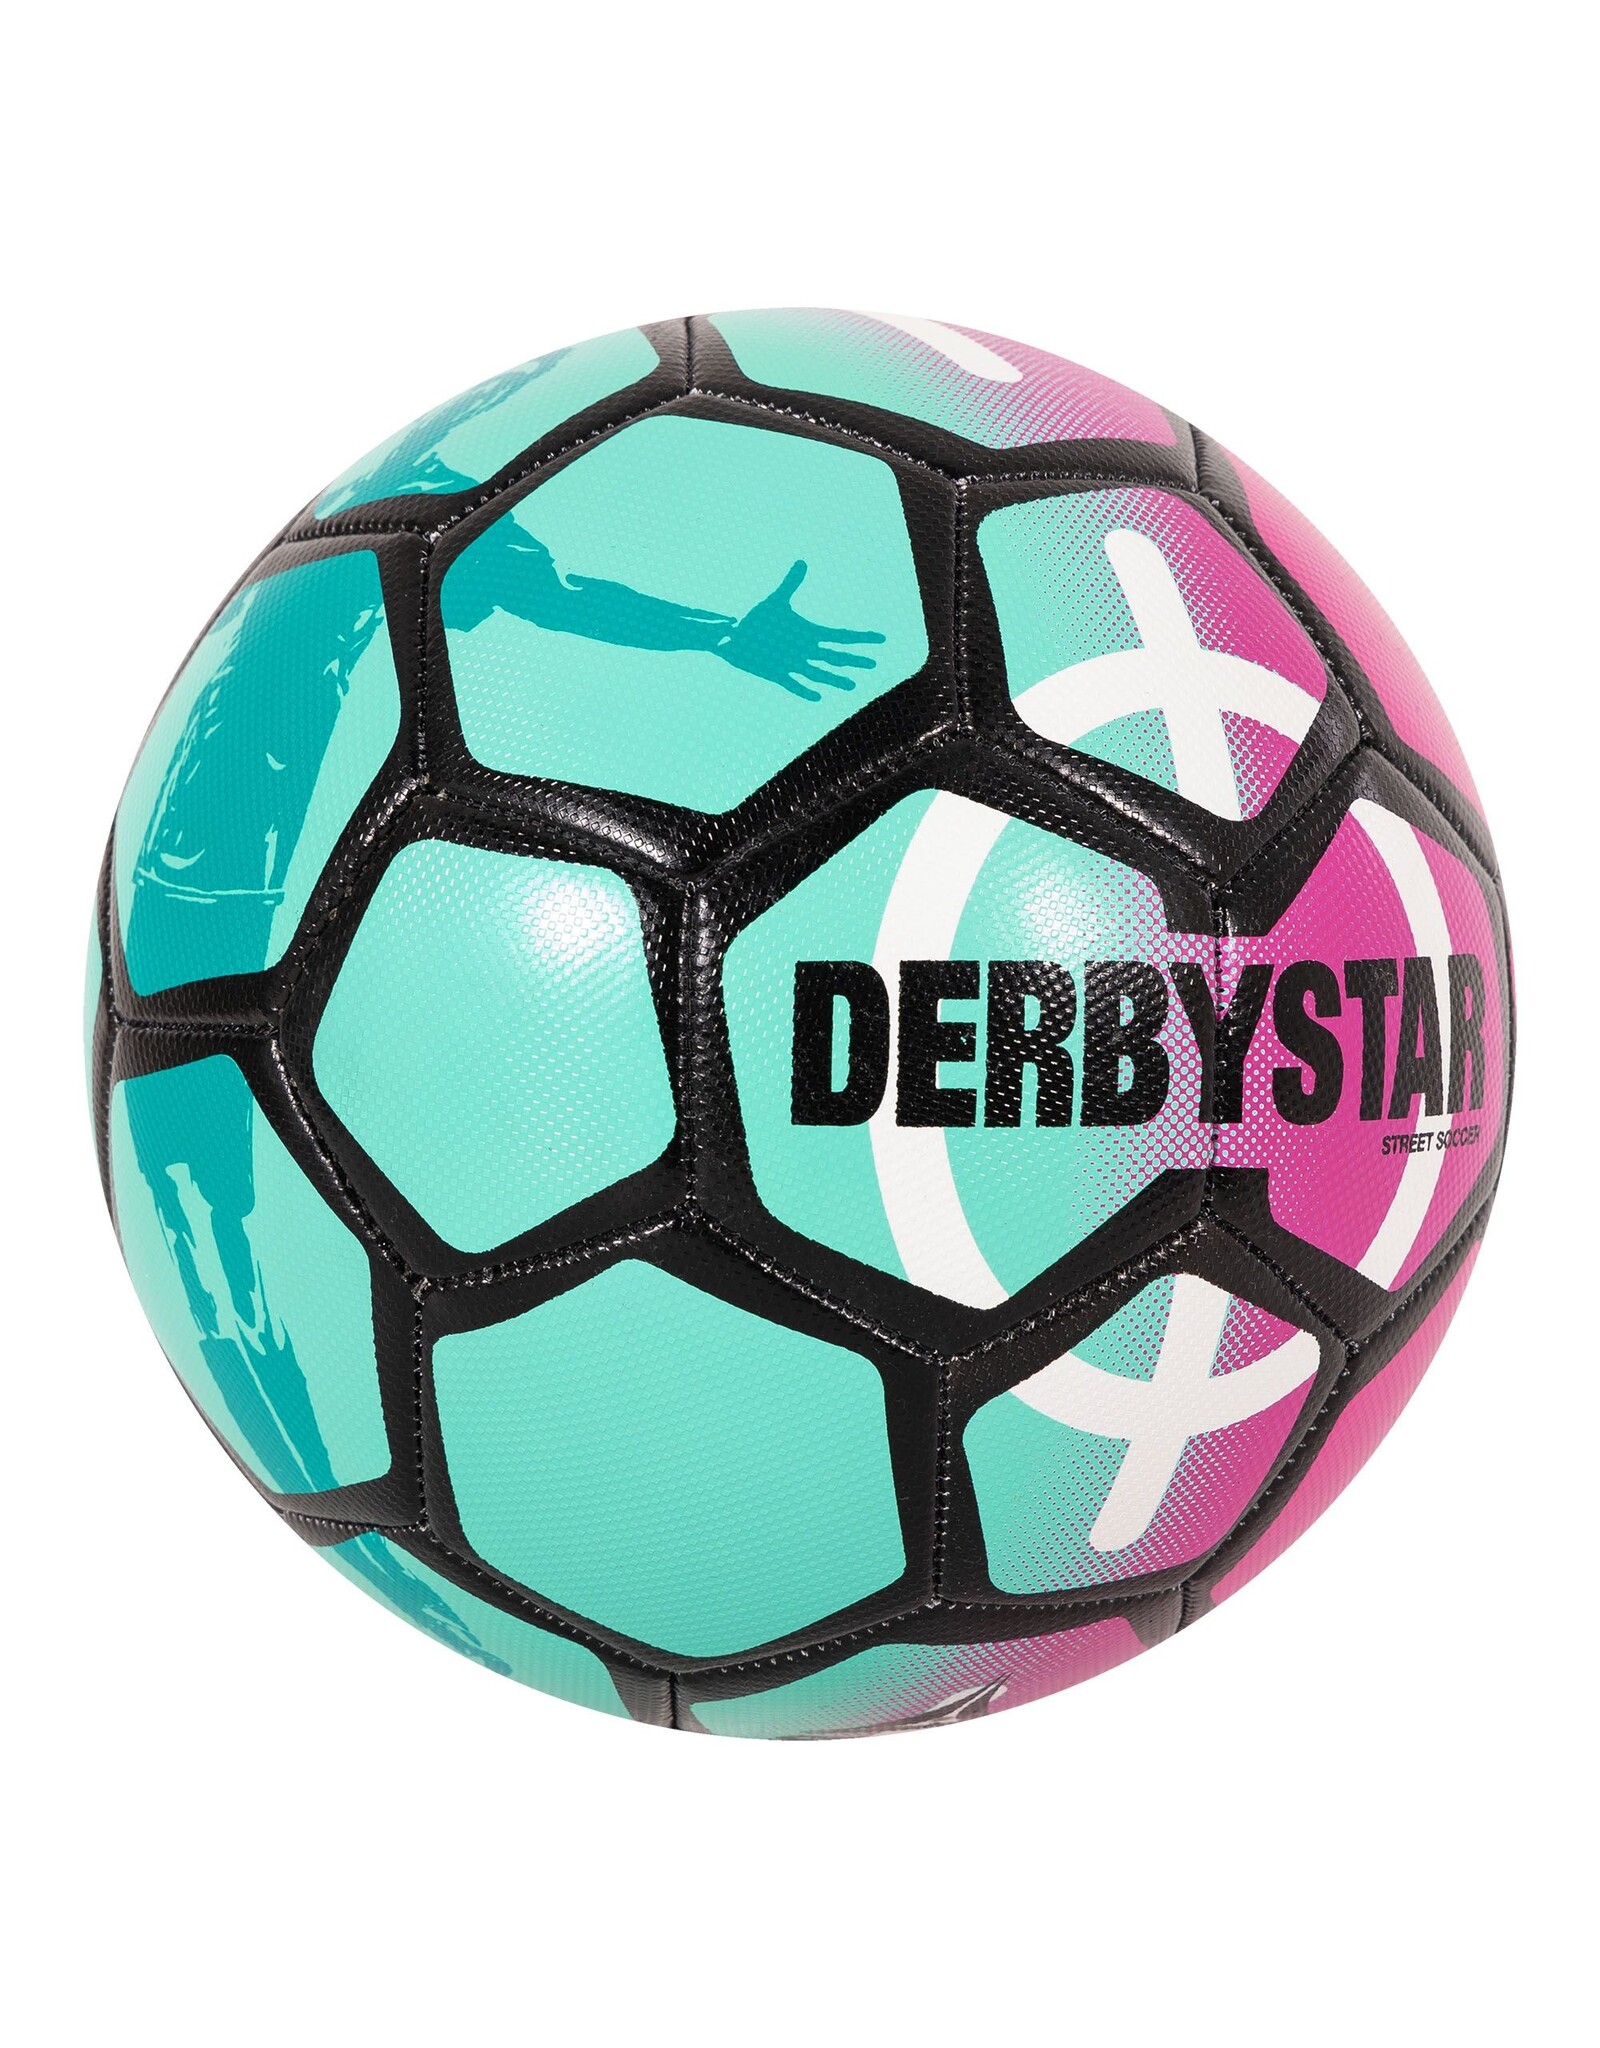 Derbystar Street Soccer Ball-Mint-Pink-Black